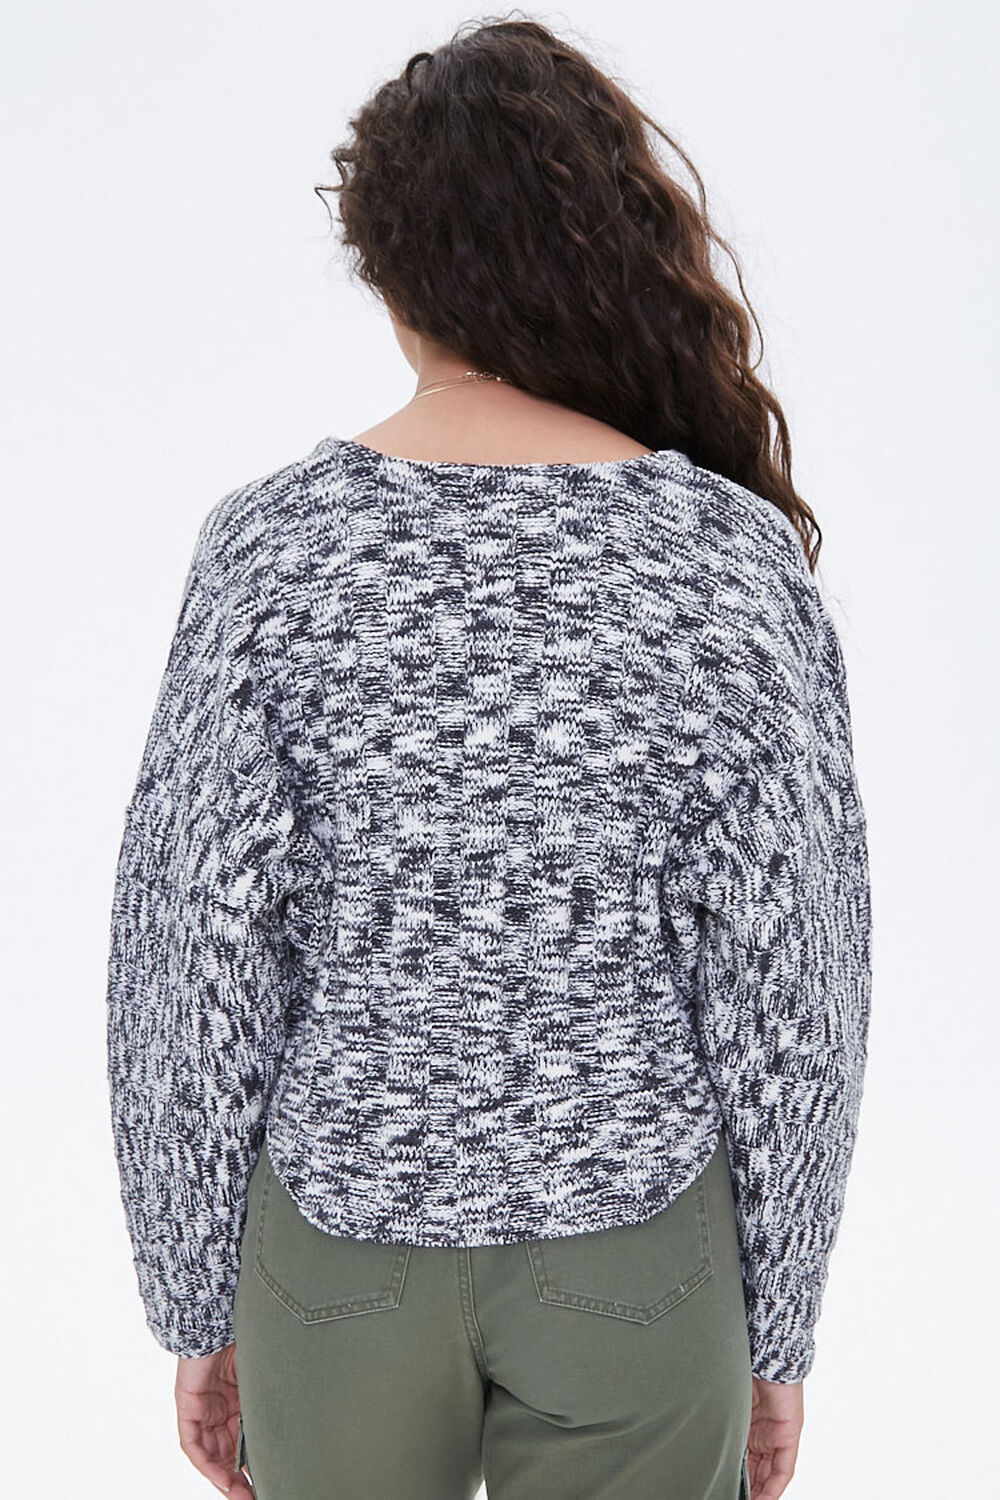 BLACK/WHITE Marled High-Low Sweater, image 3